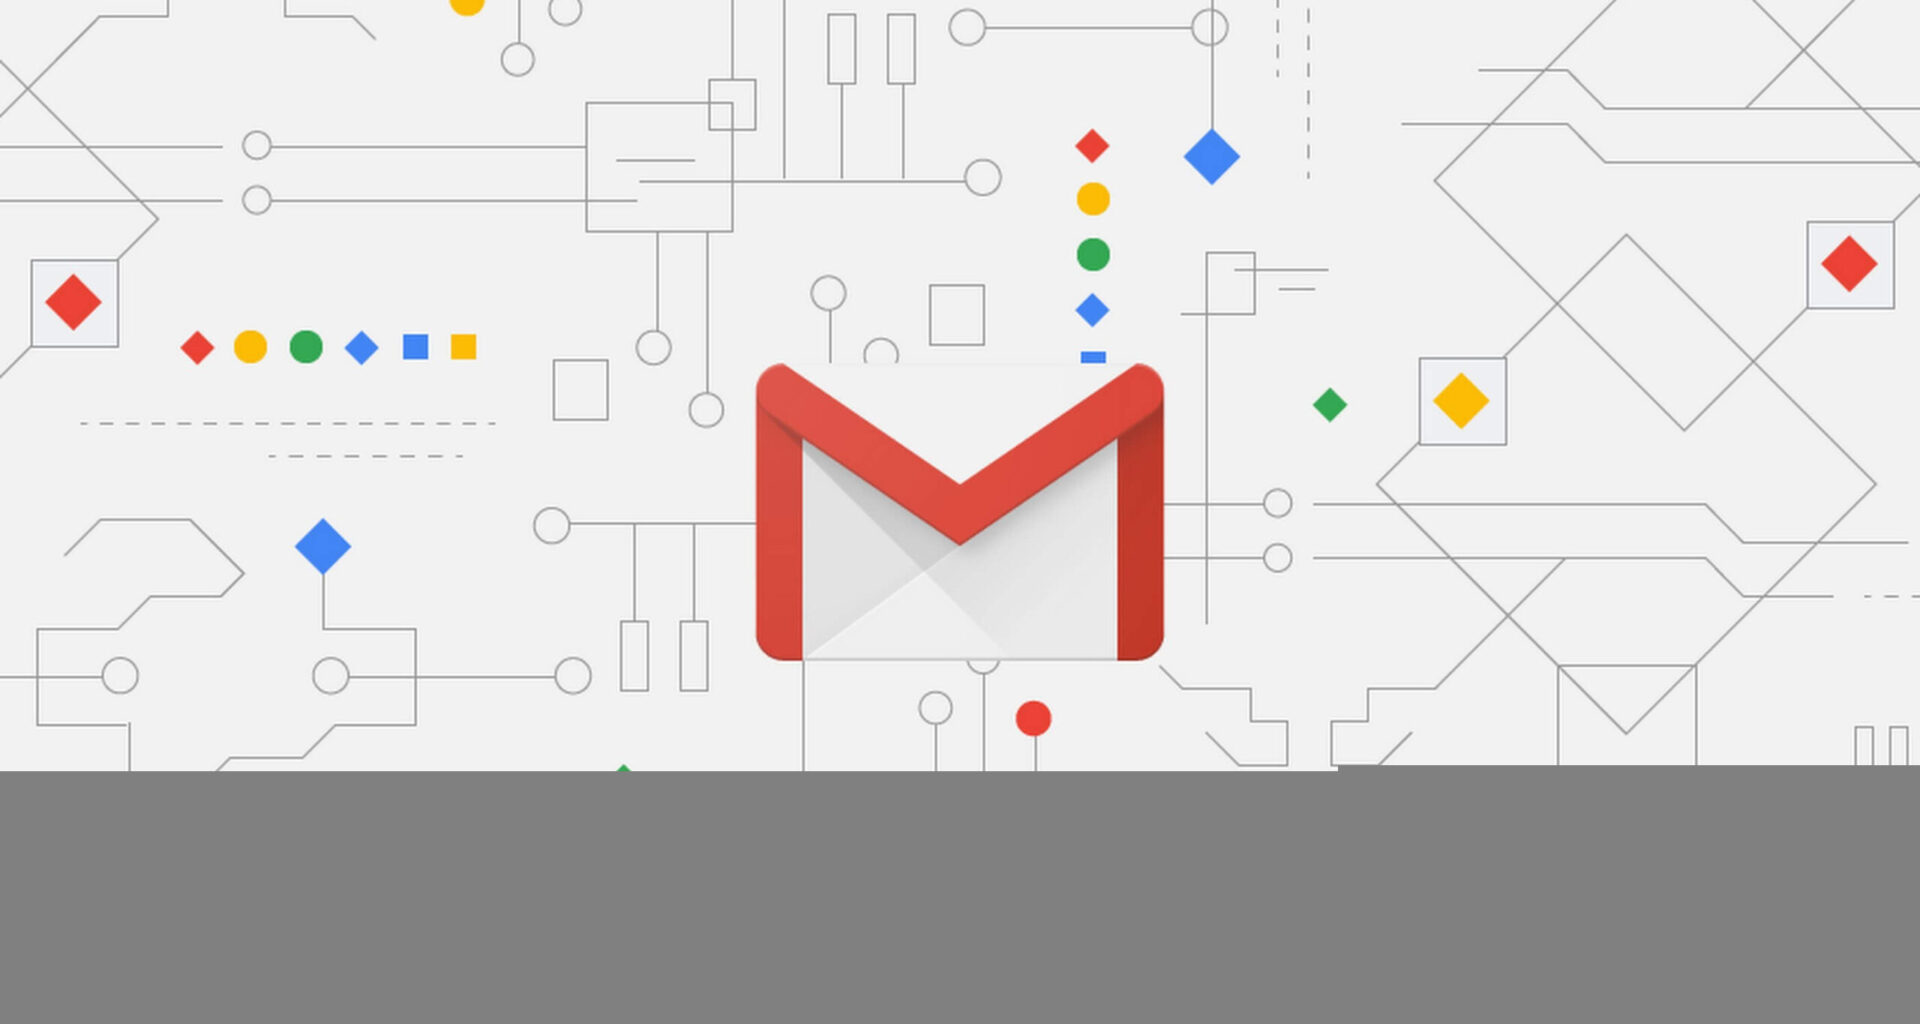 New gmail interface